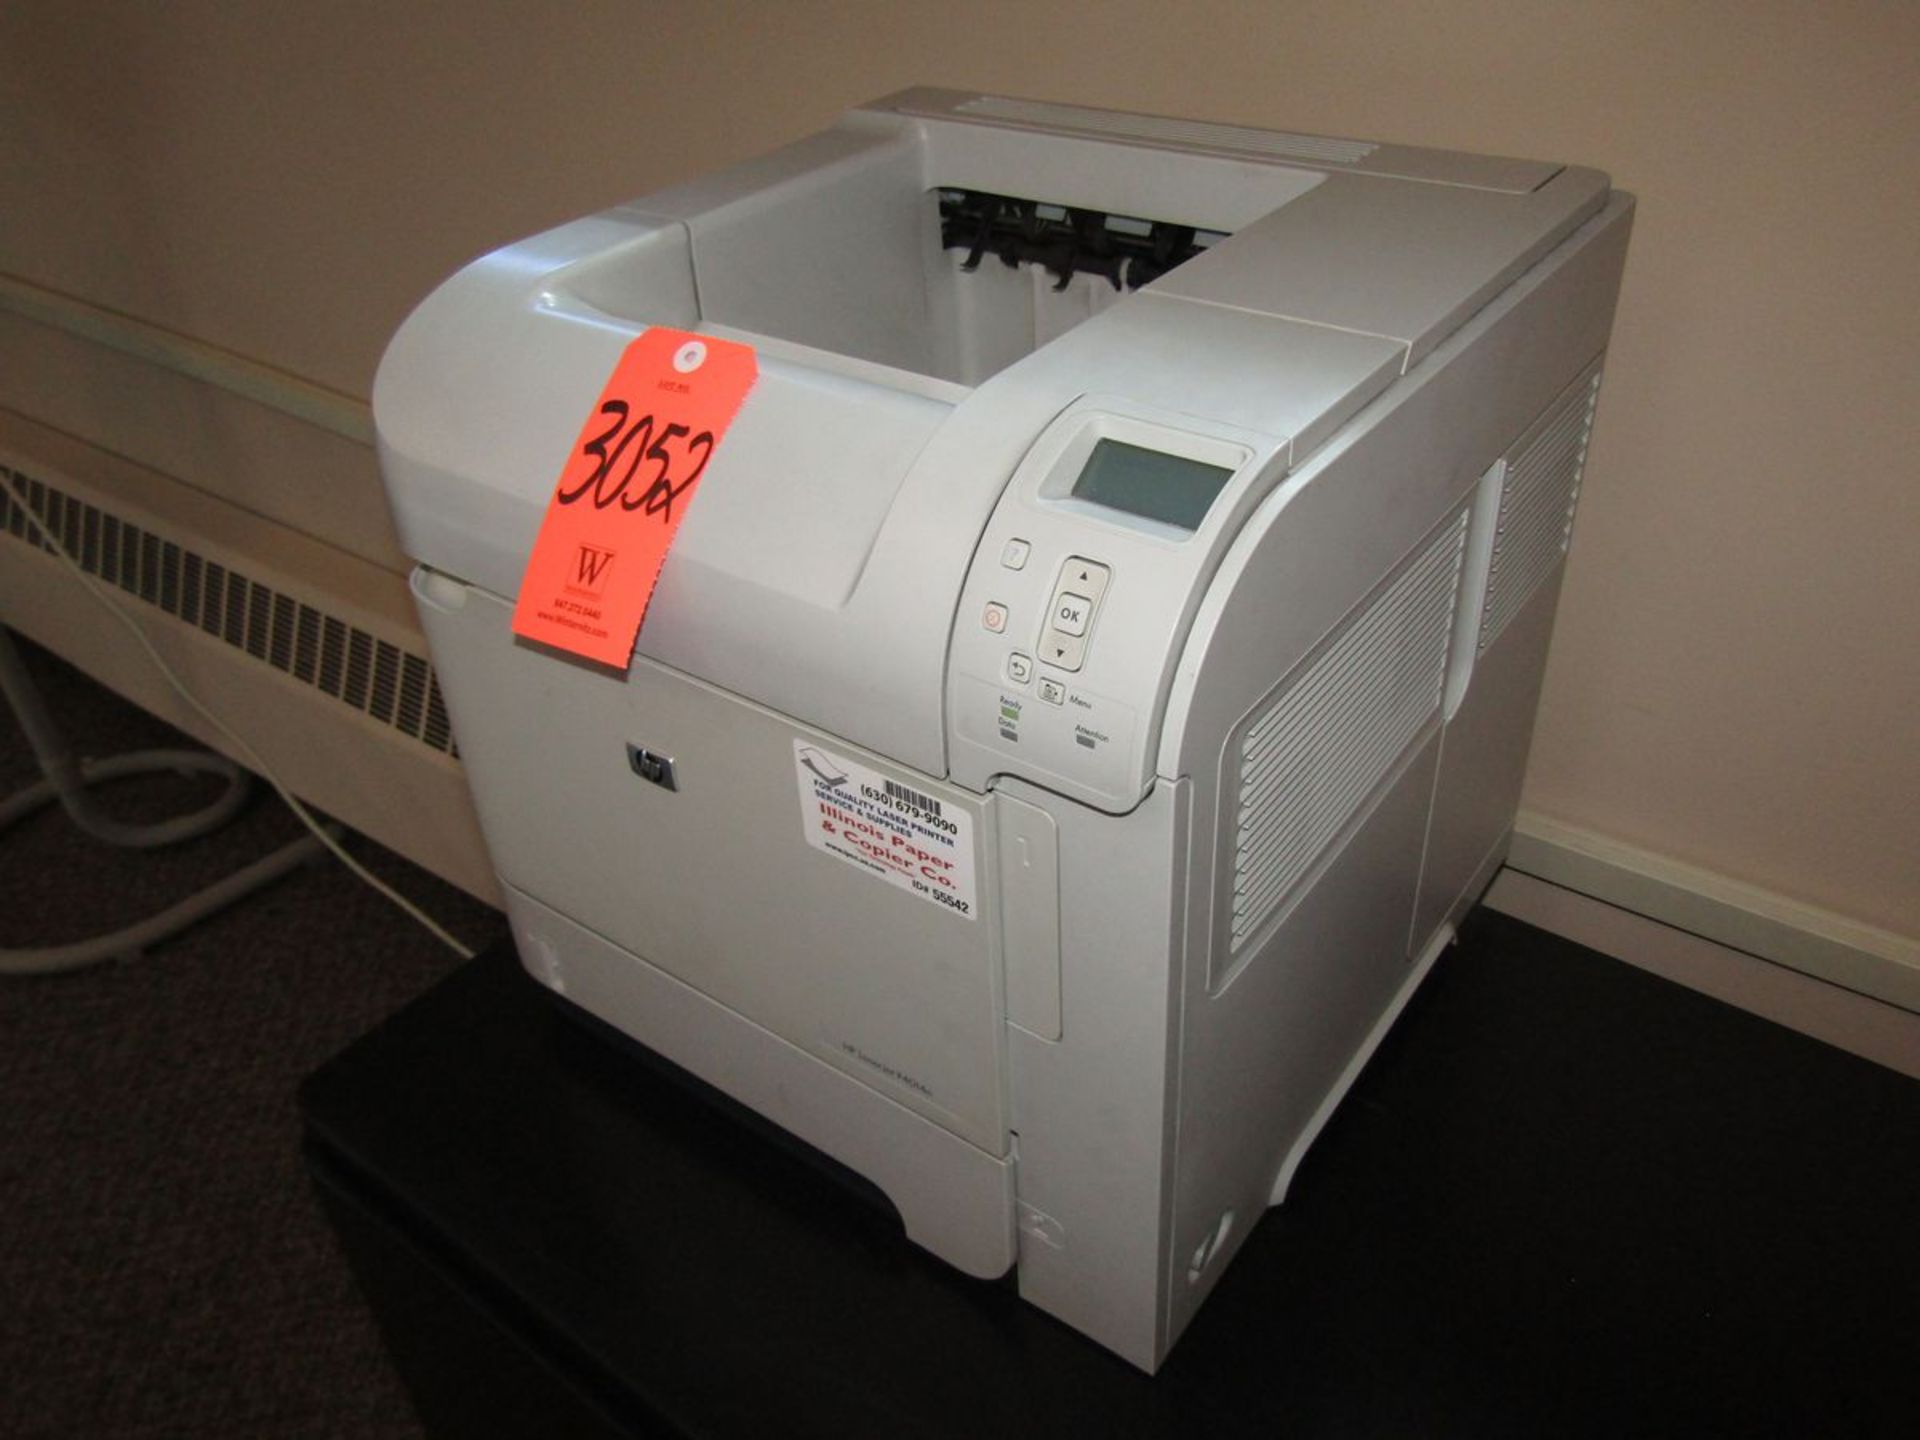 Hewlett-Packard LaserJet P4014n Printer (Delayed Removal - Cannot Begin Removal Until 4/23/